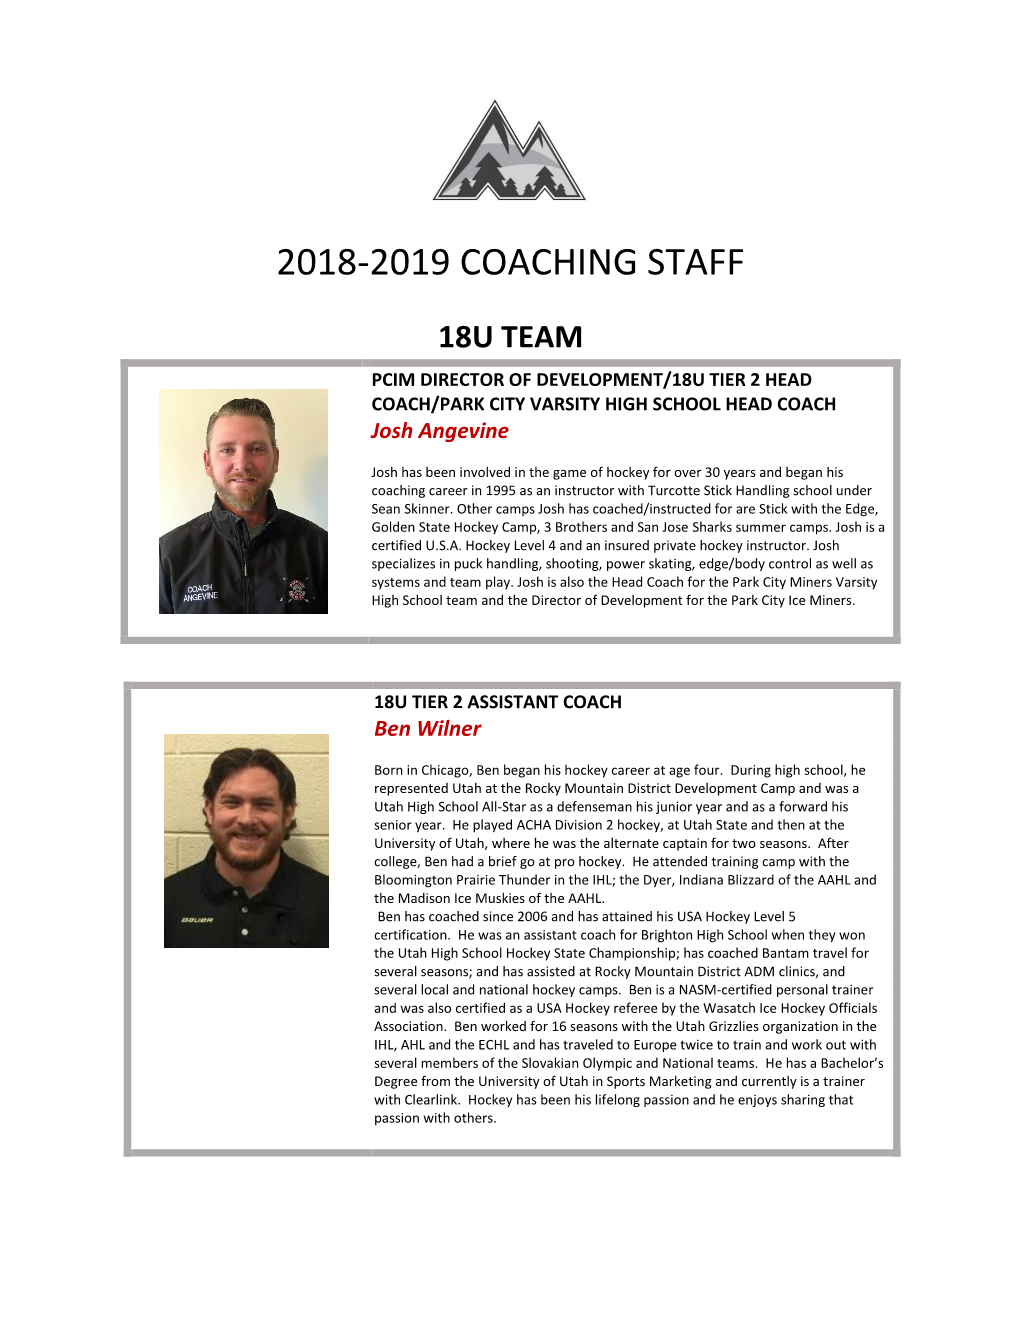 2018-2019 Coaching Staff